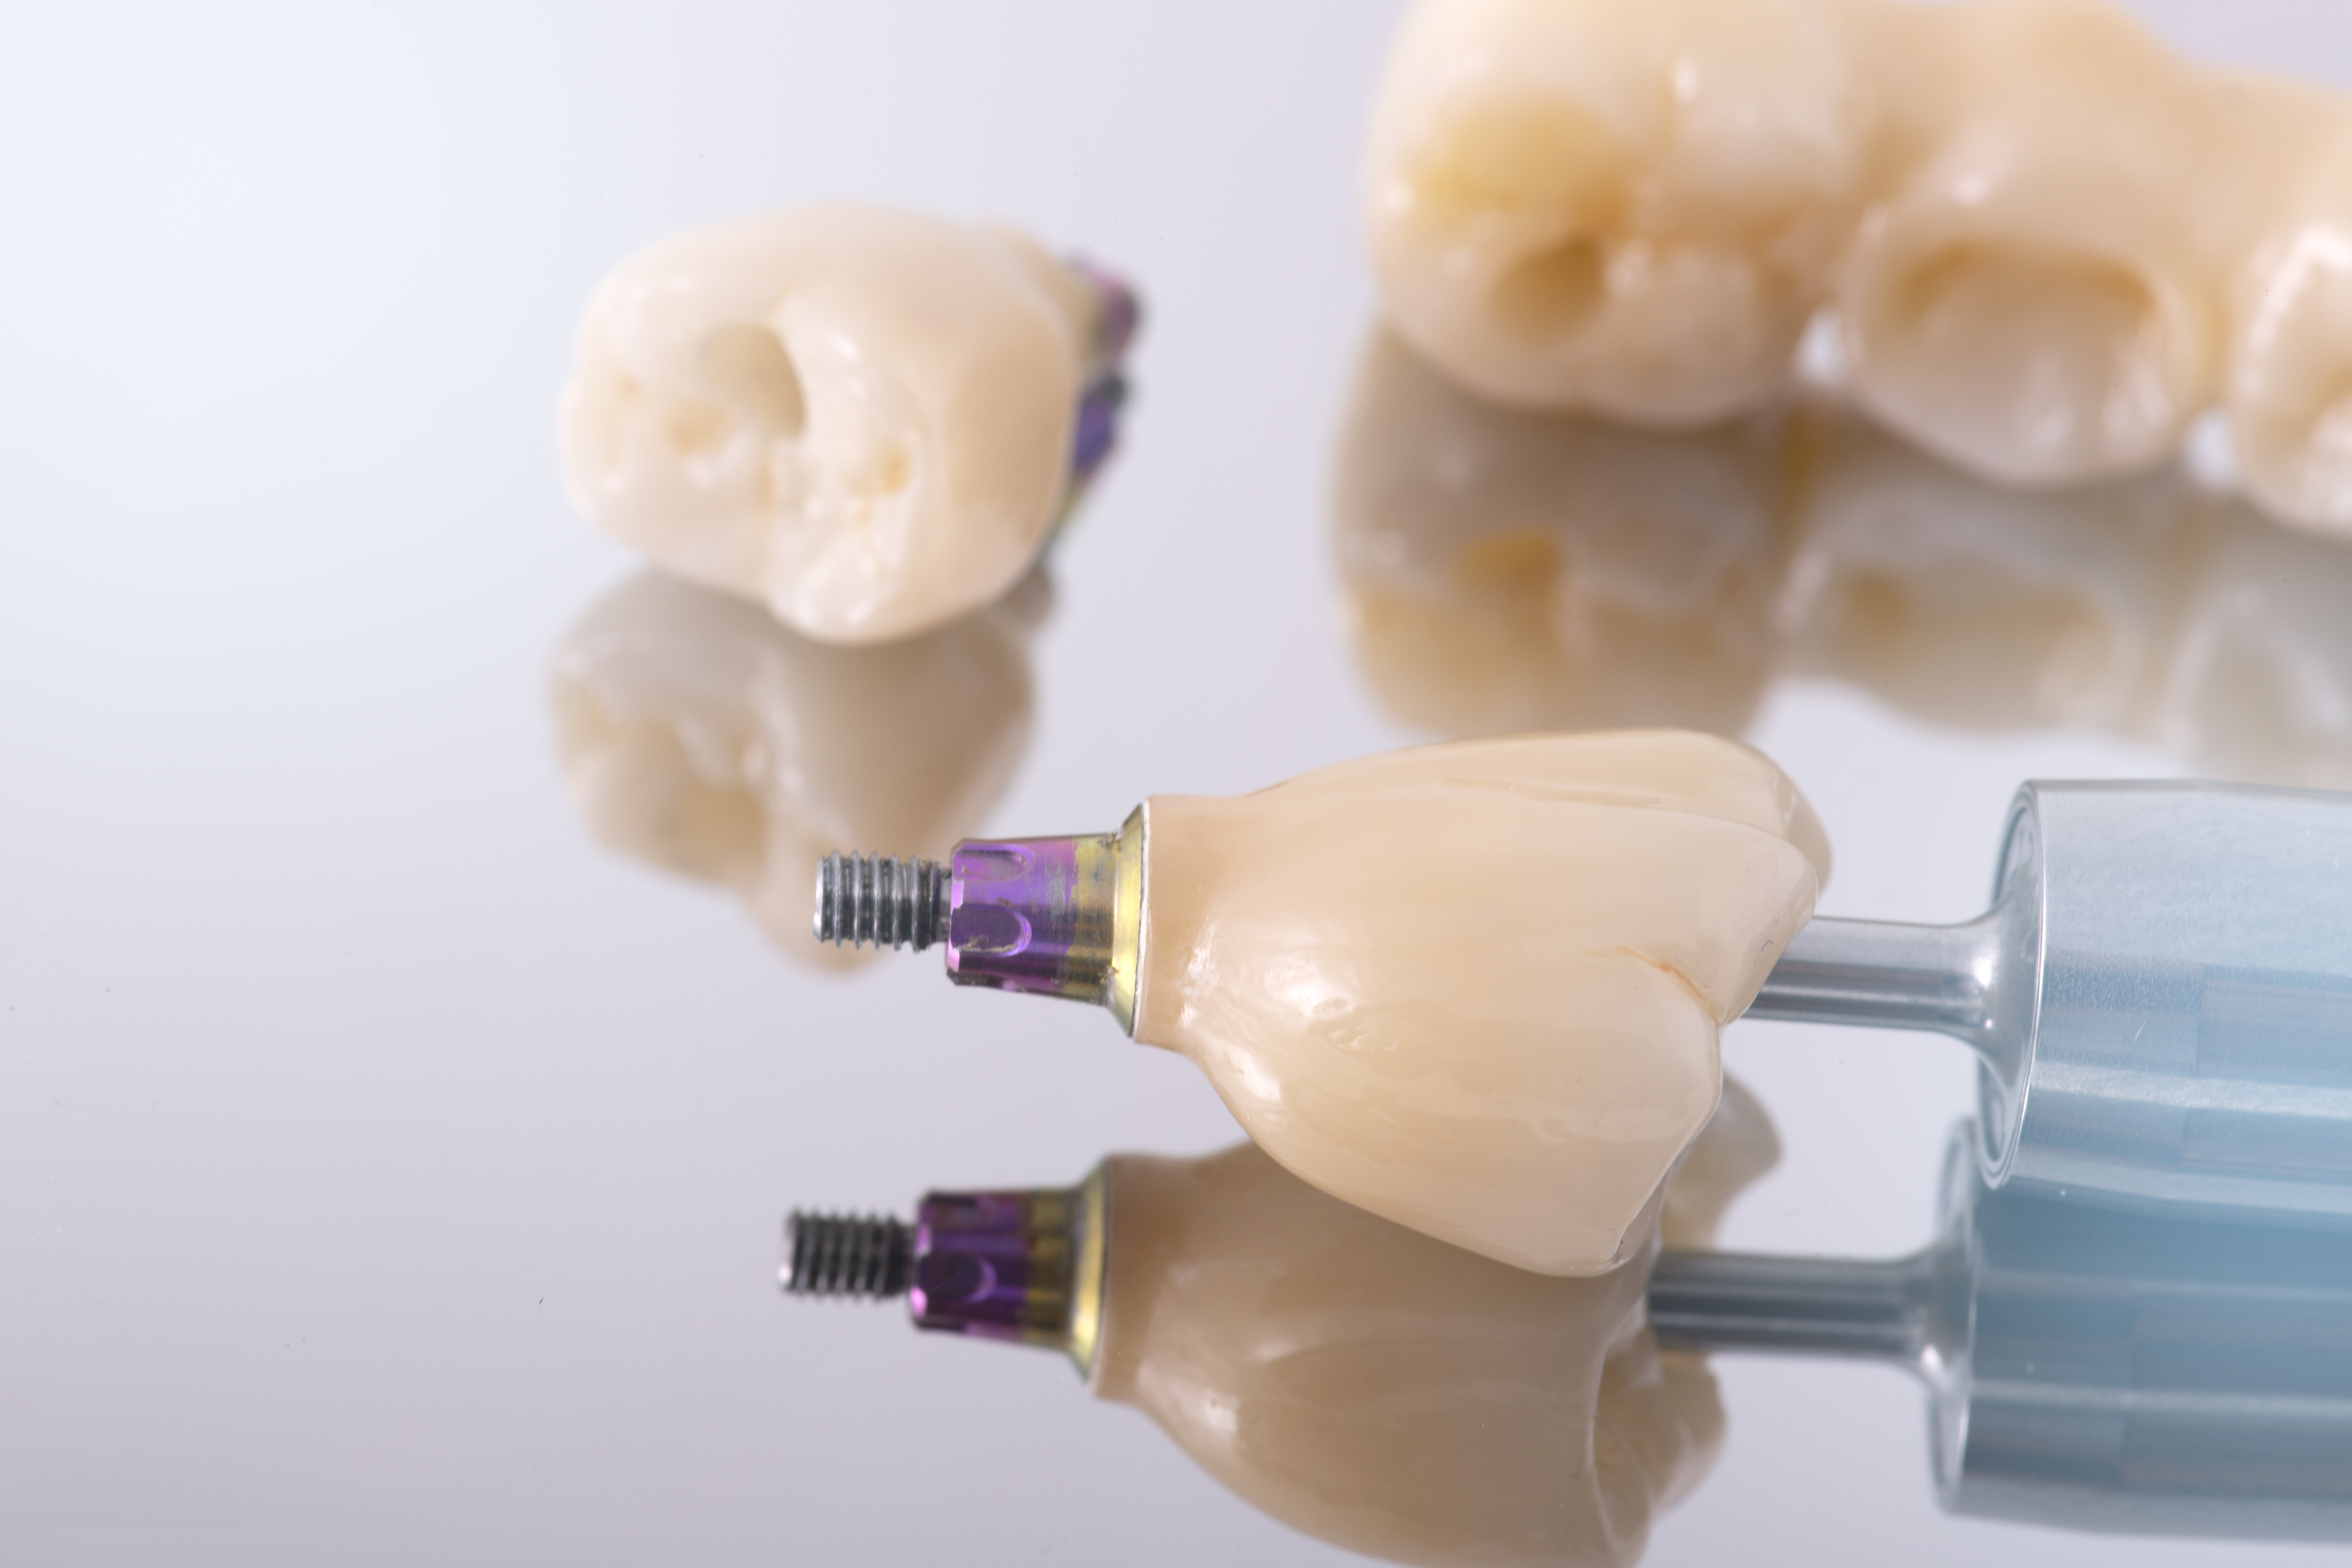 Tooth human implant. Dental concept. Ceramic human teeth or dentures.